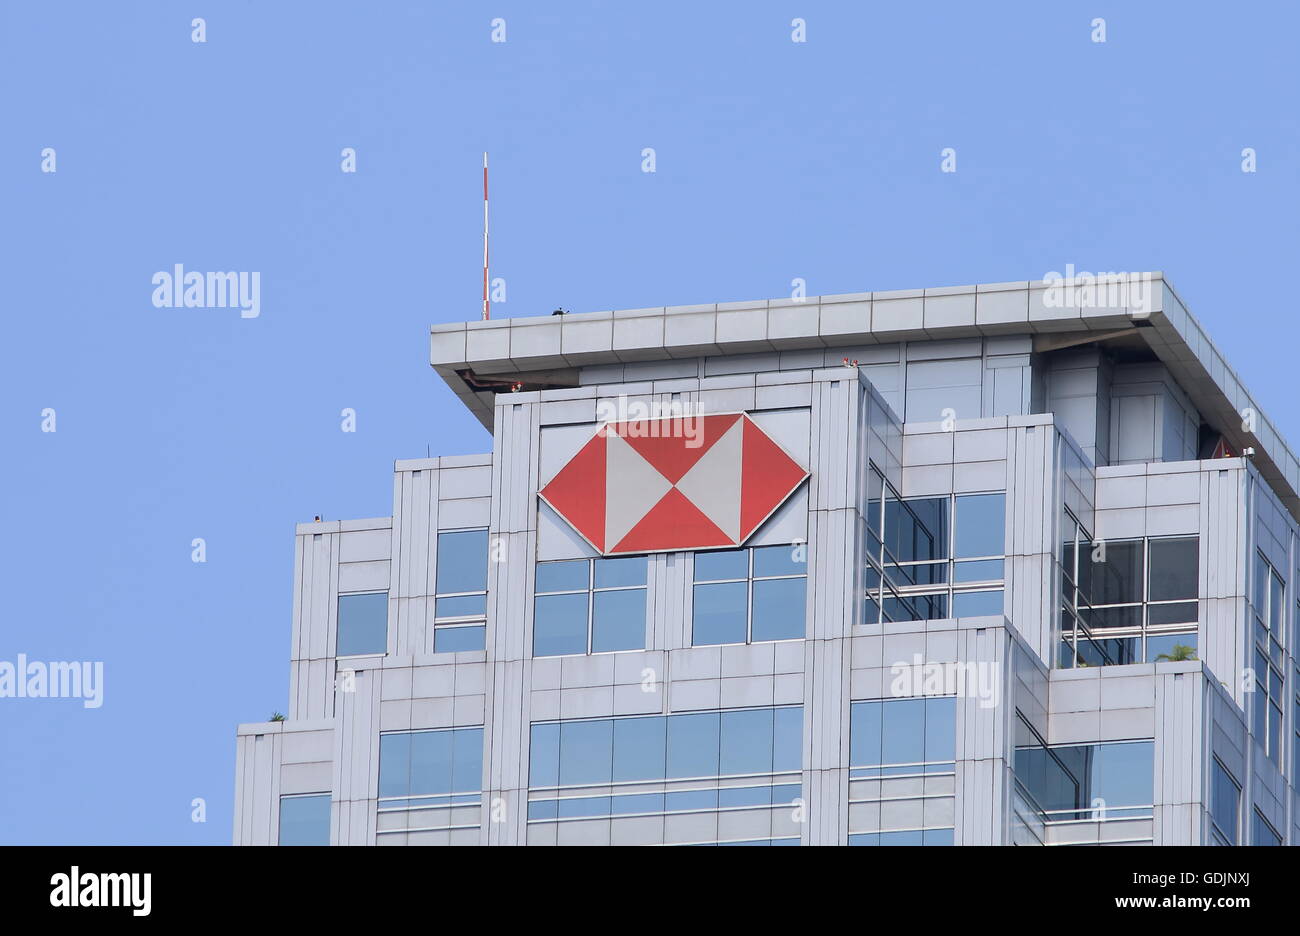 HSBC bank logo Stock Photo